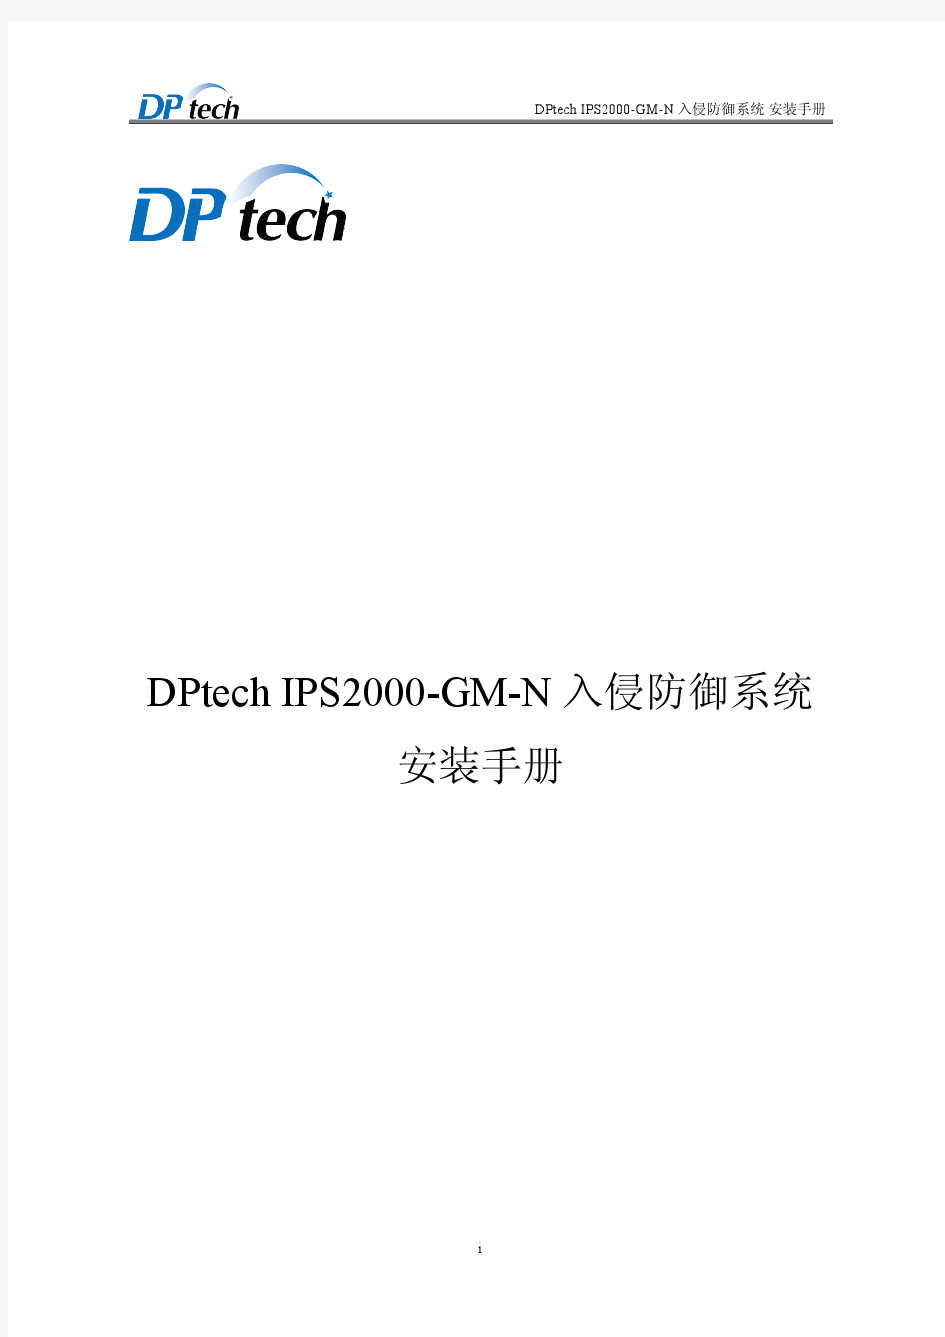 DPtech IPS2000-GM-N入侵防御系统安装手册